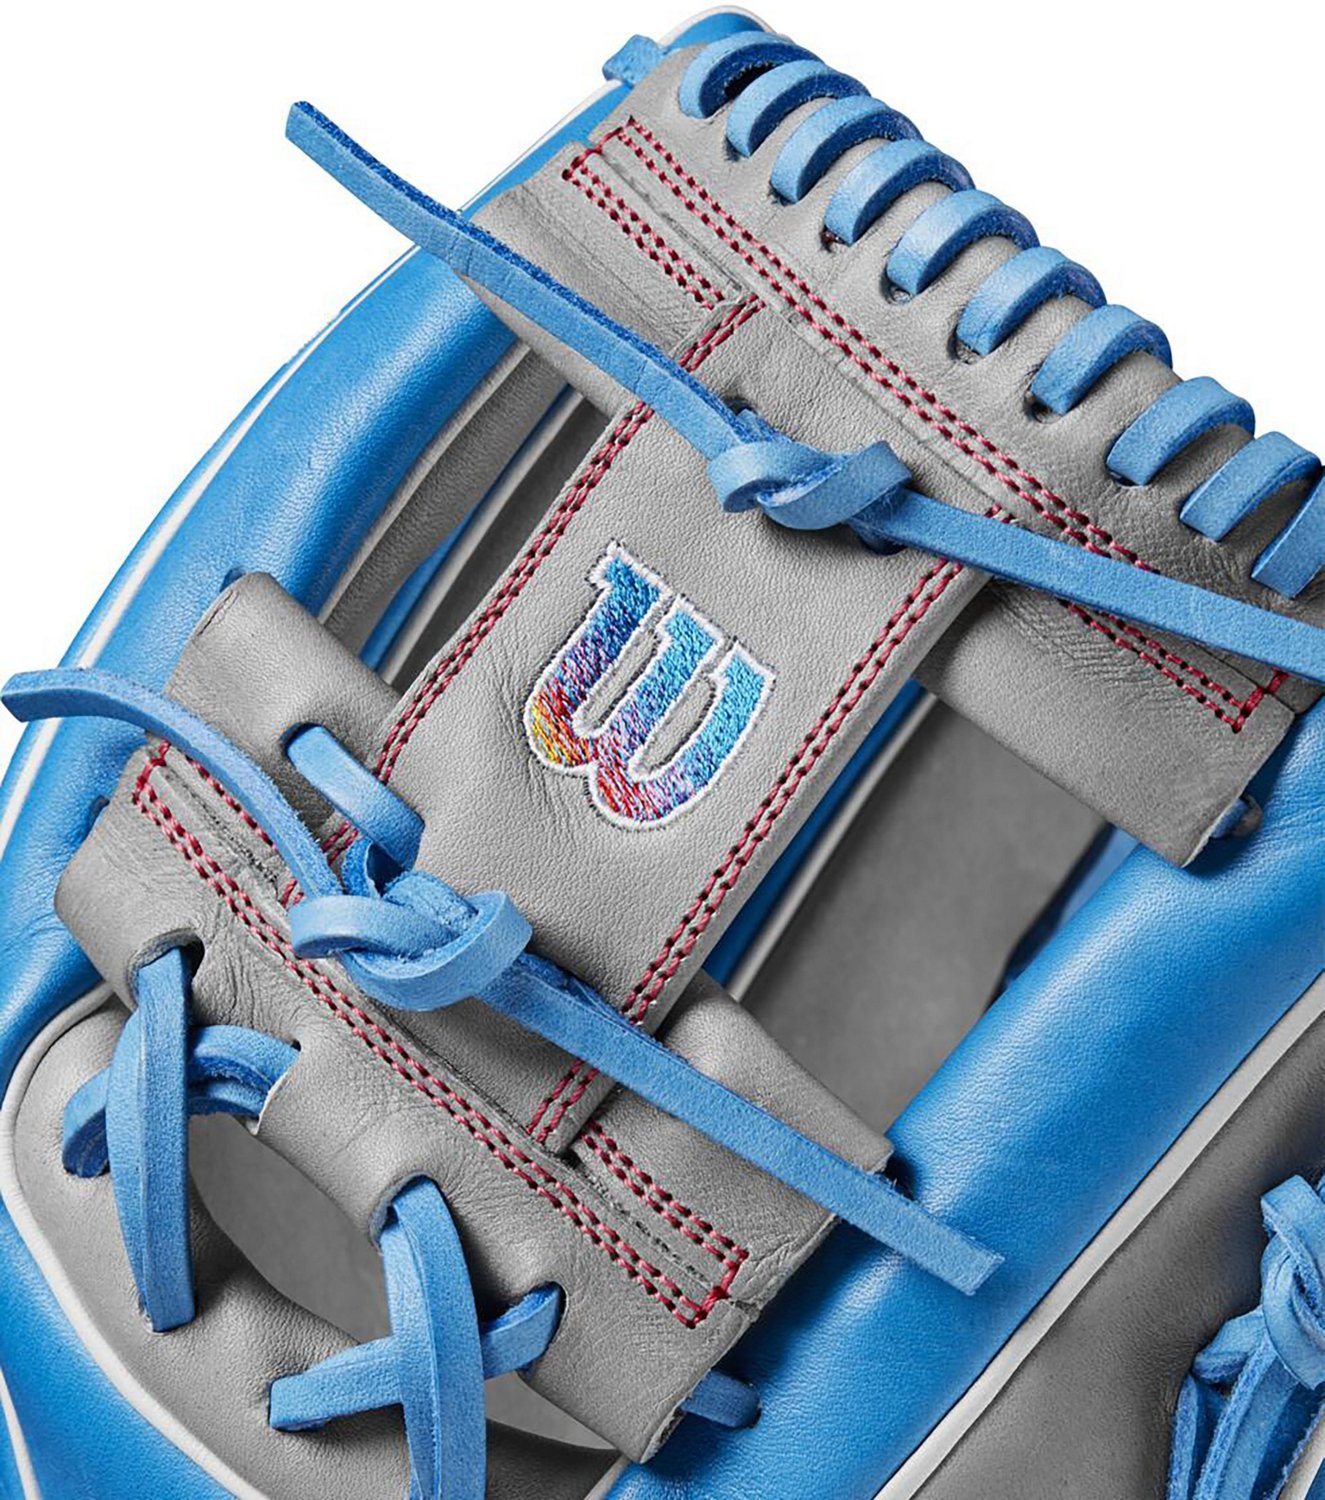 Wilson 2024 Autism Speaks A2000 1786 11.5 inch Infield Baseball Glove